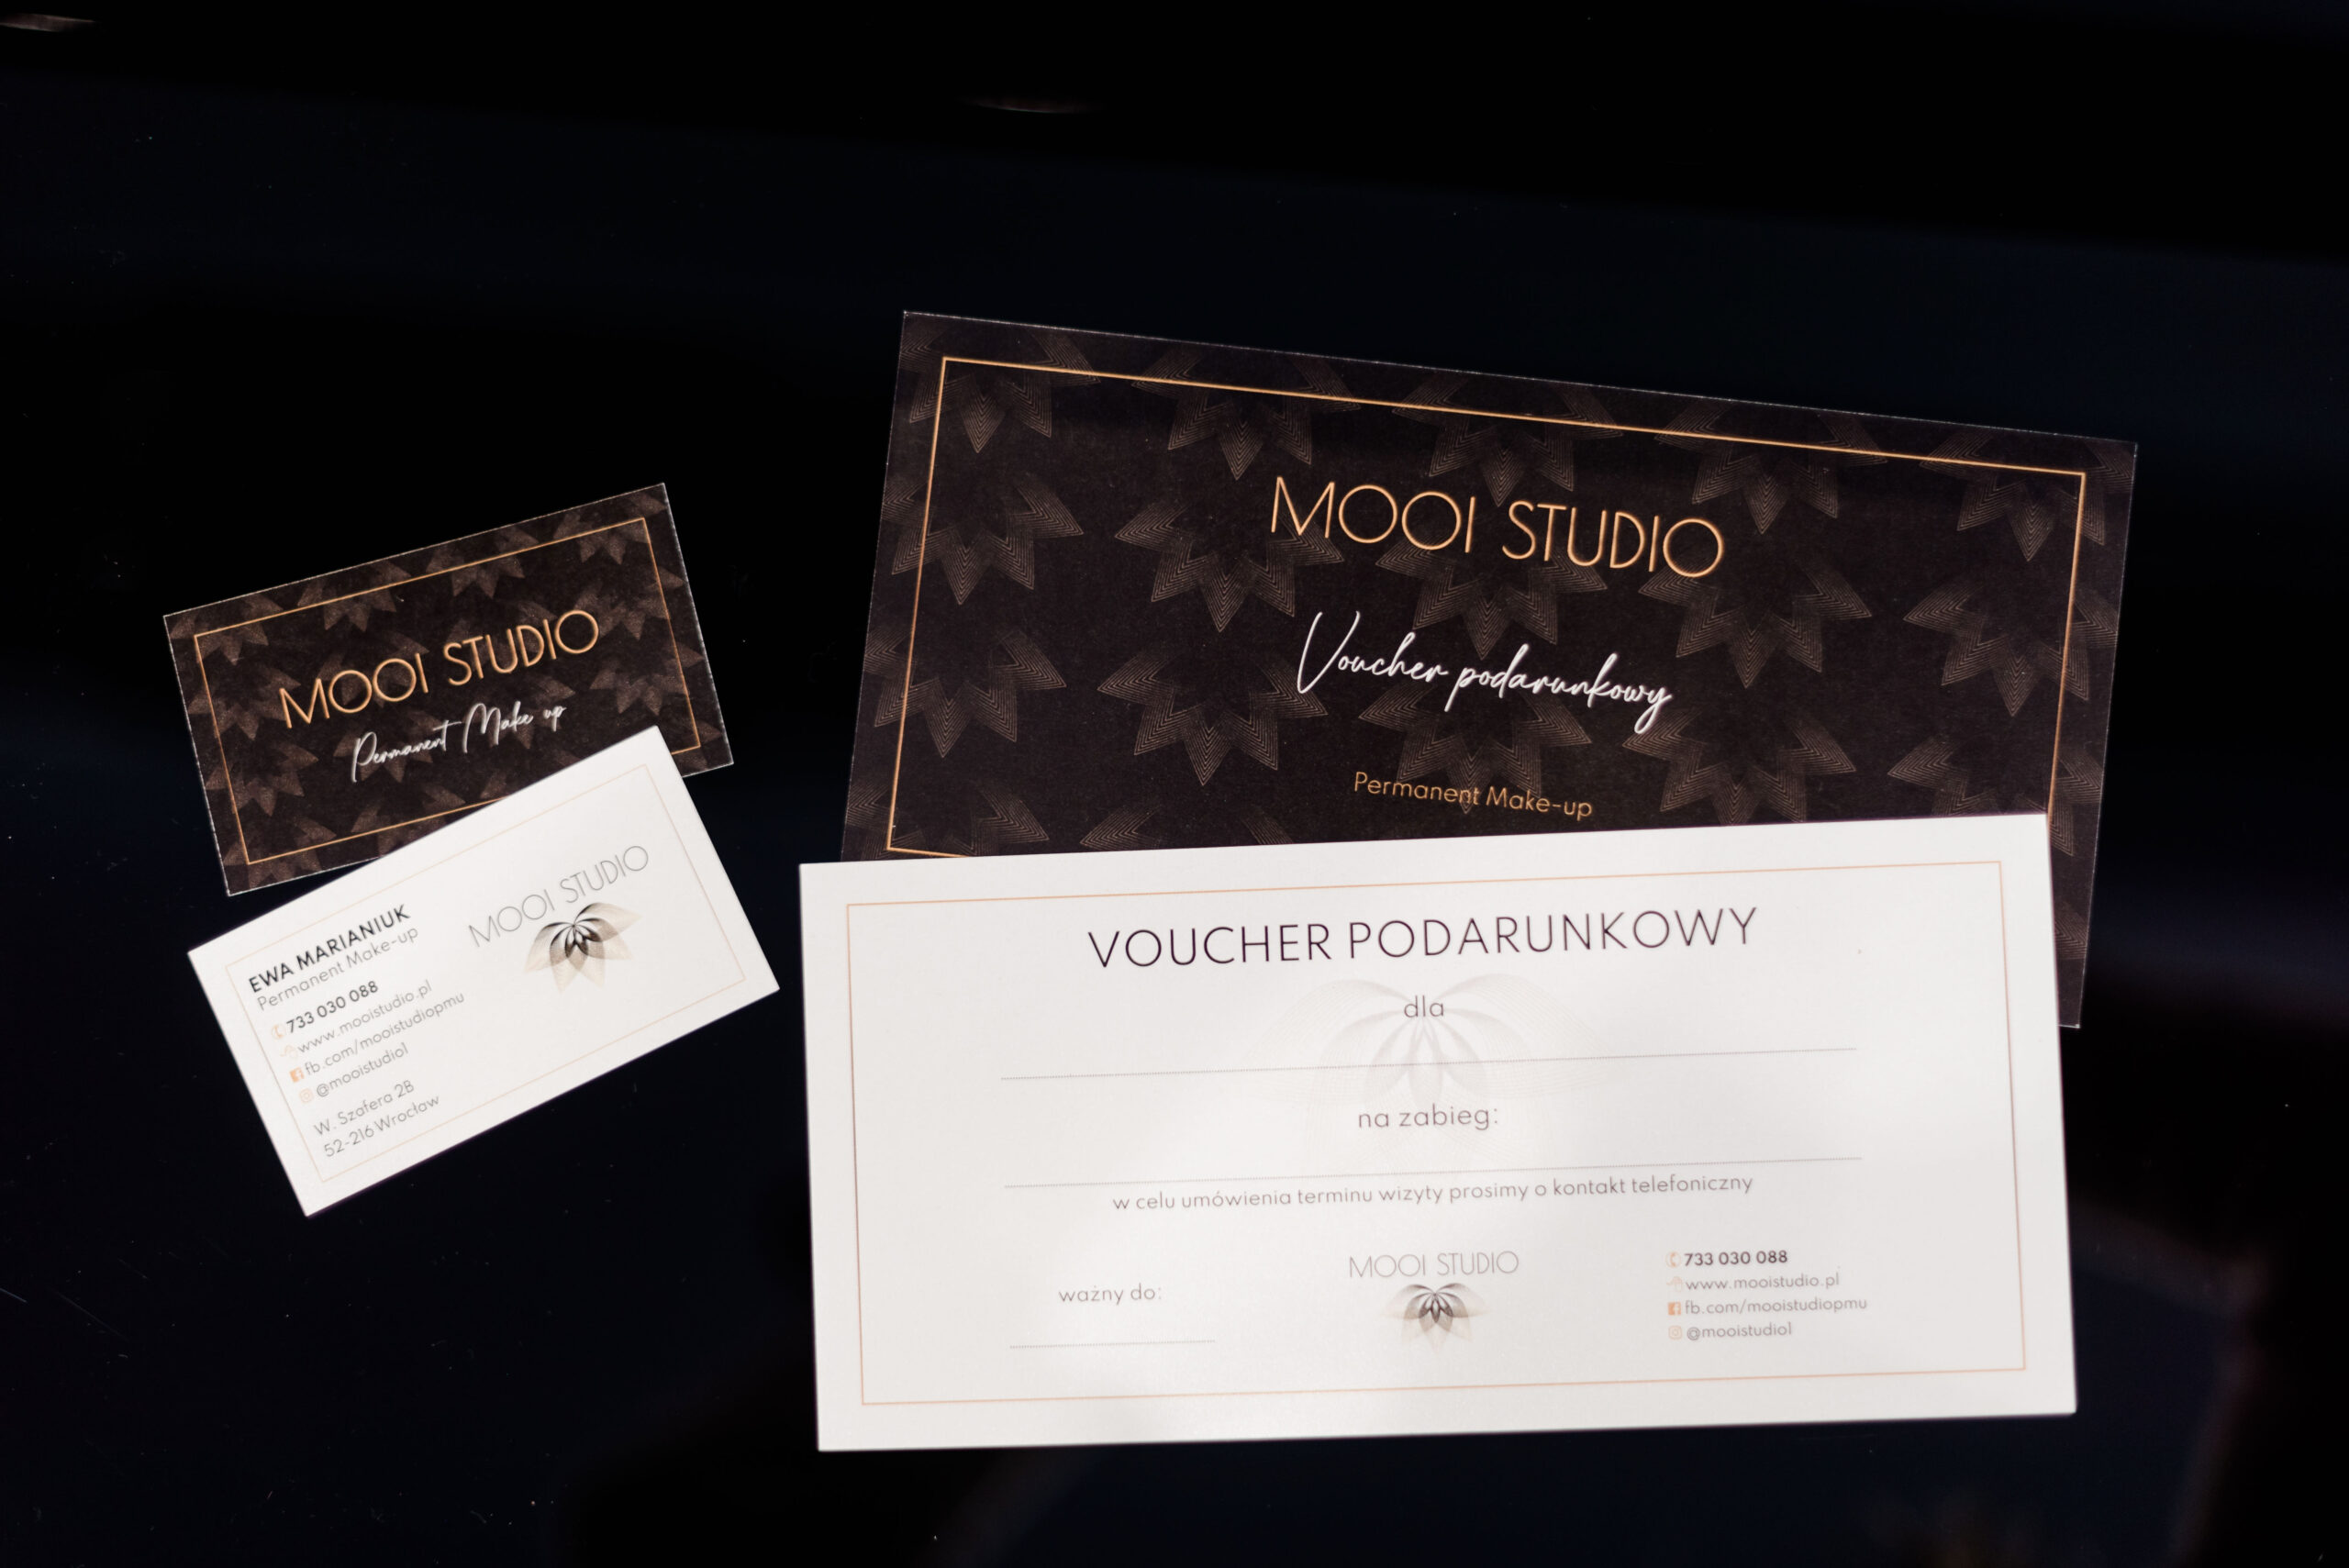 Voucher for treatments at MOOI Studio